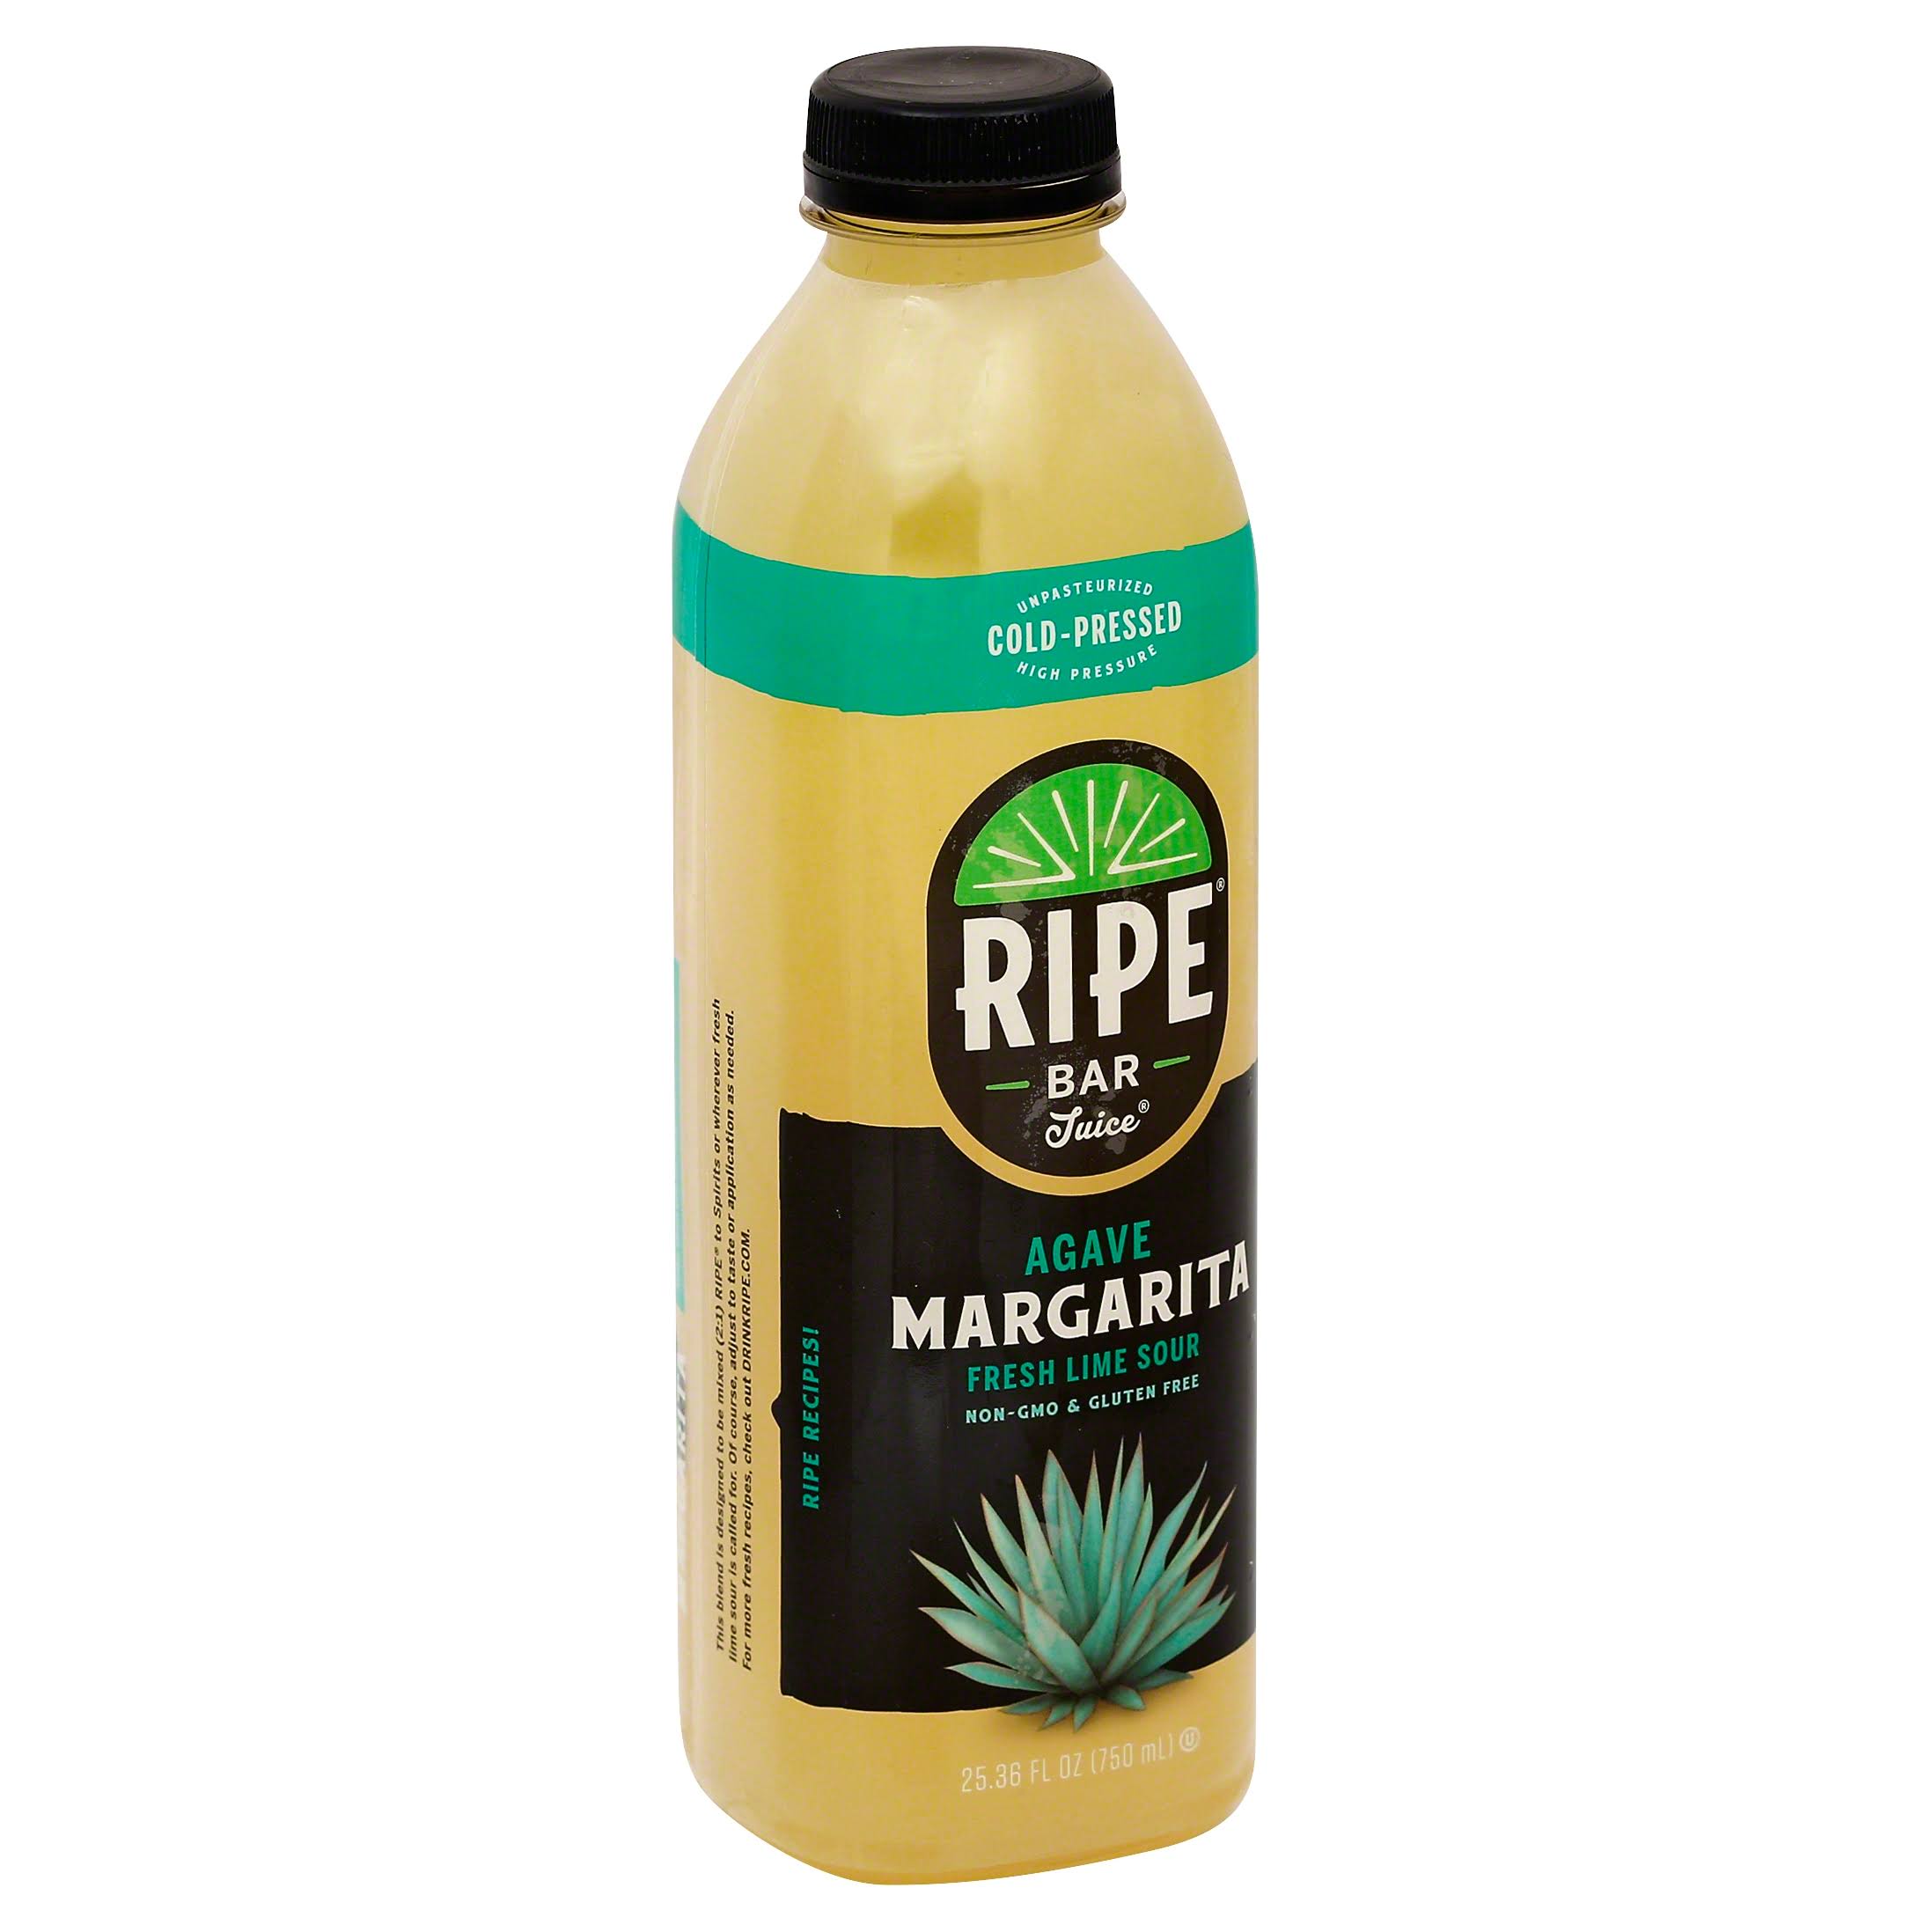 Ripe Bar Juice, Agave Margarita, Fresh Lime Sour - 25.36 fl oz